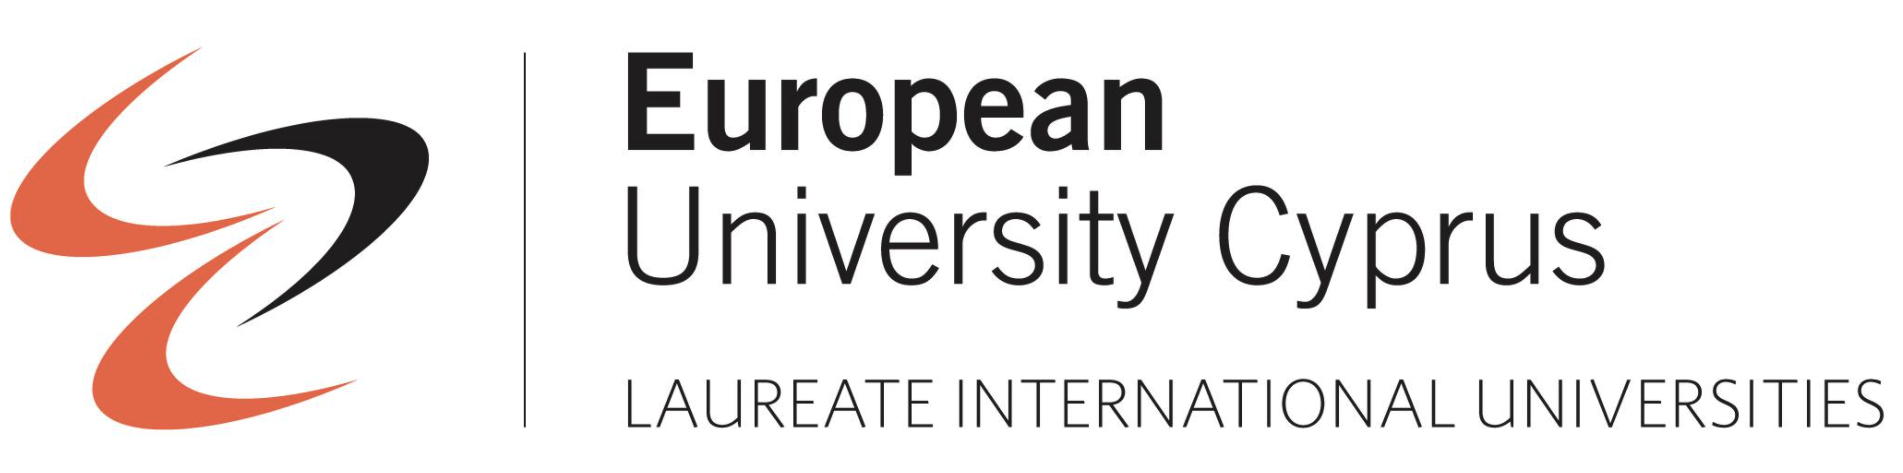 European University Cyprus Logo